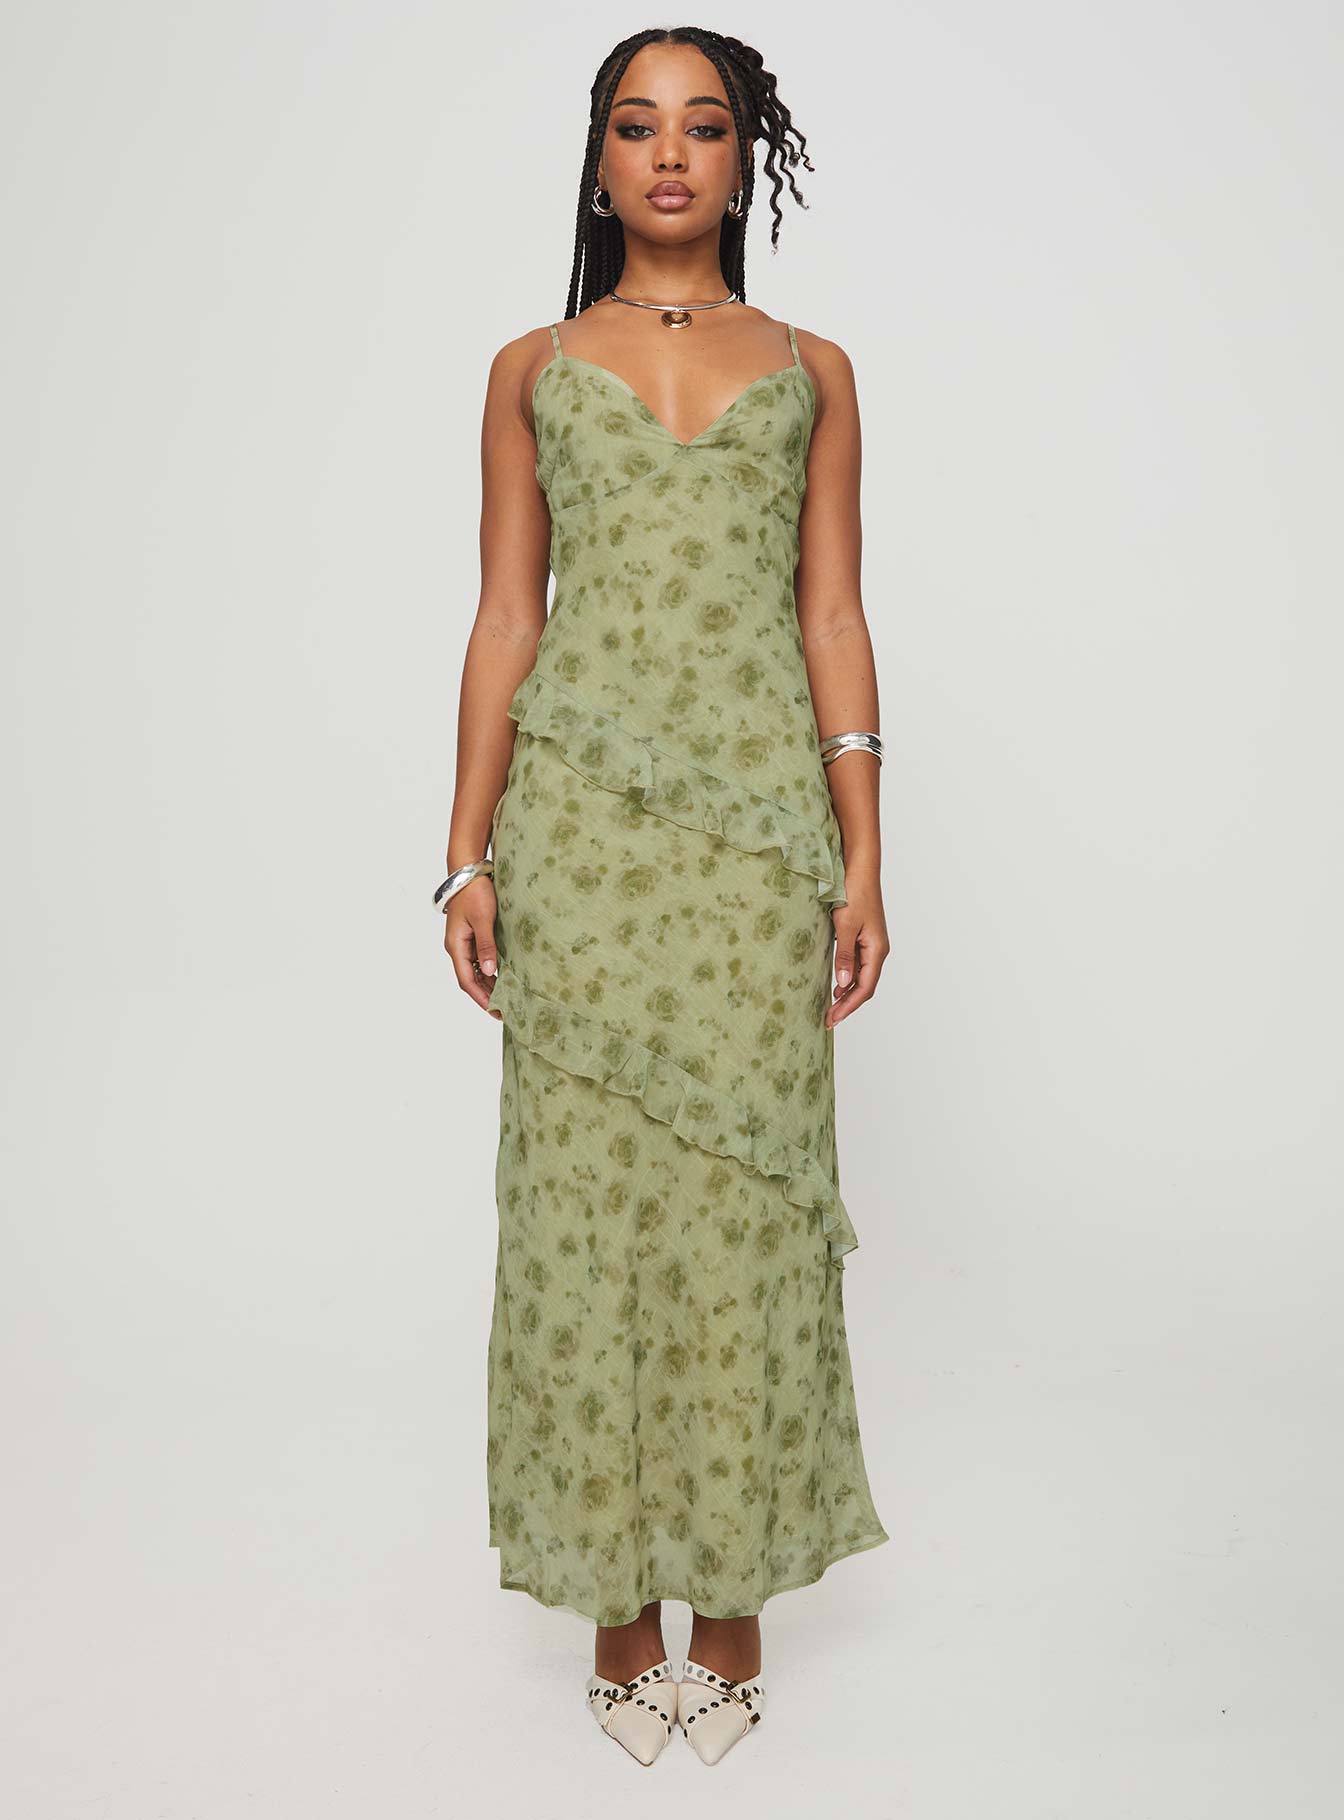 Shop Formal Dress - Teffoli Maxi Dress Green featured image